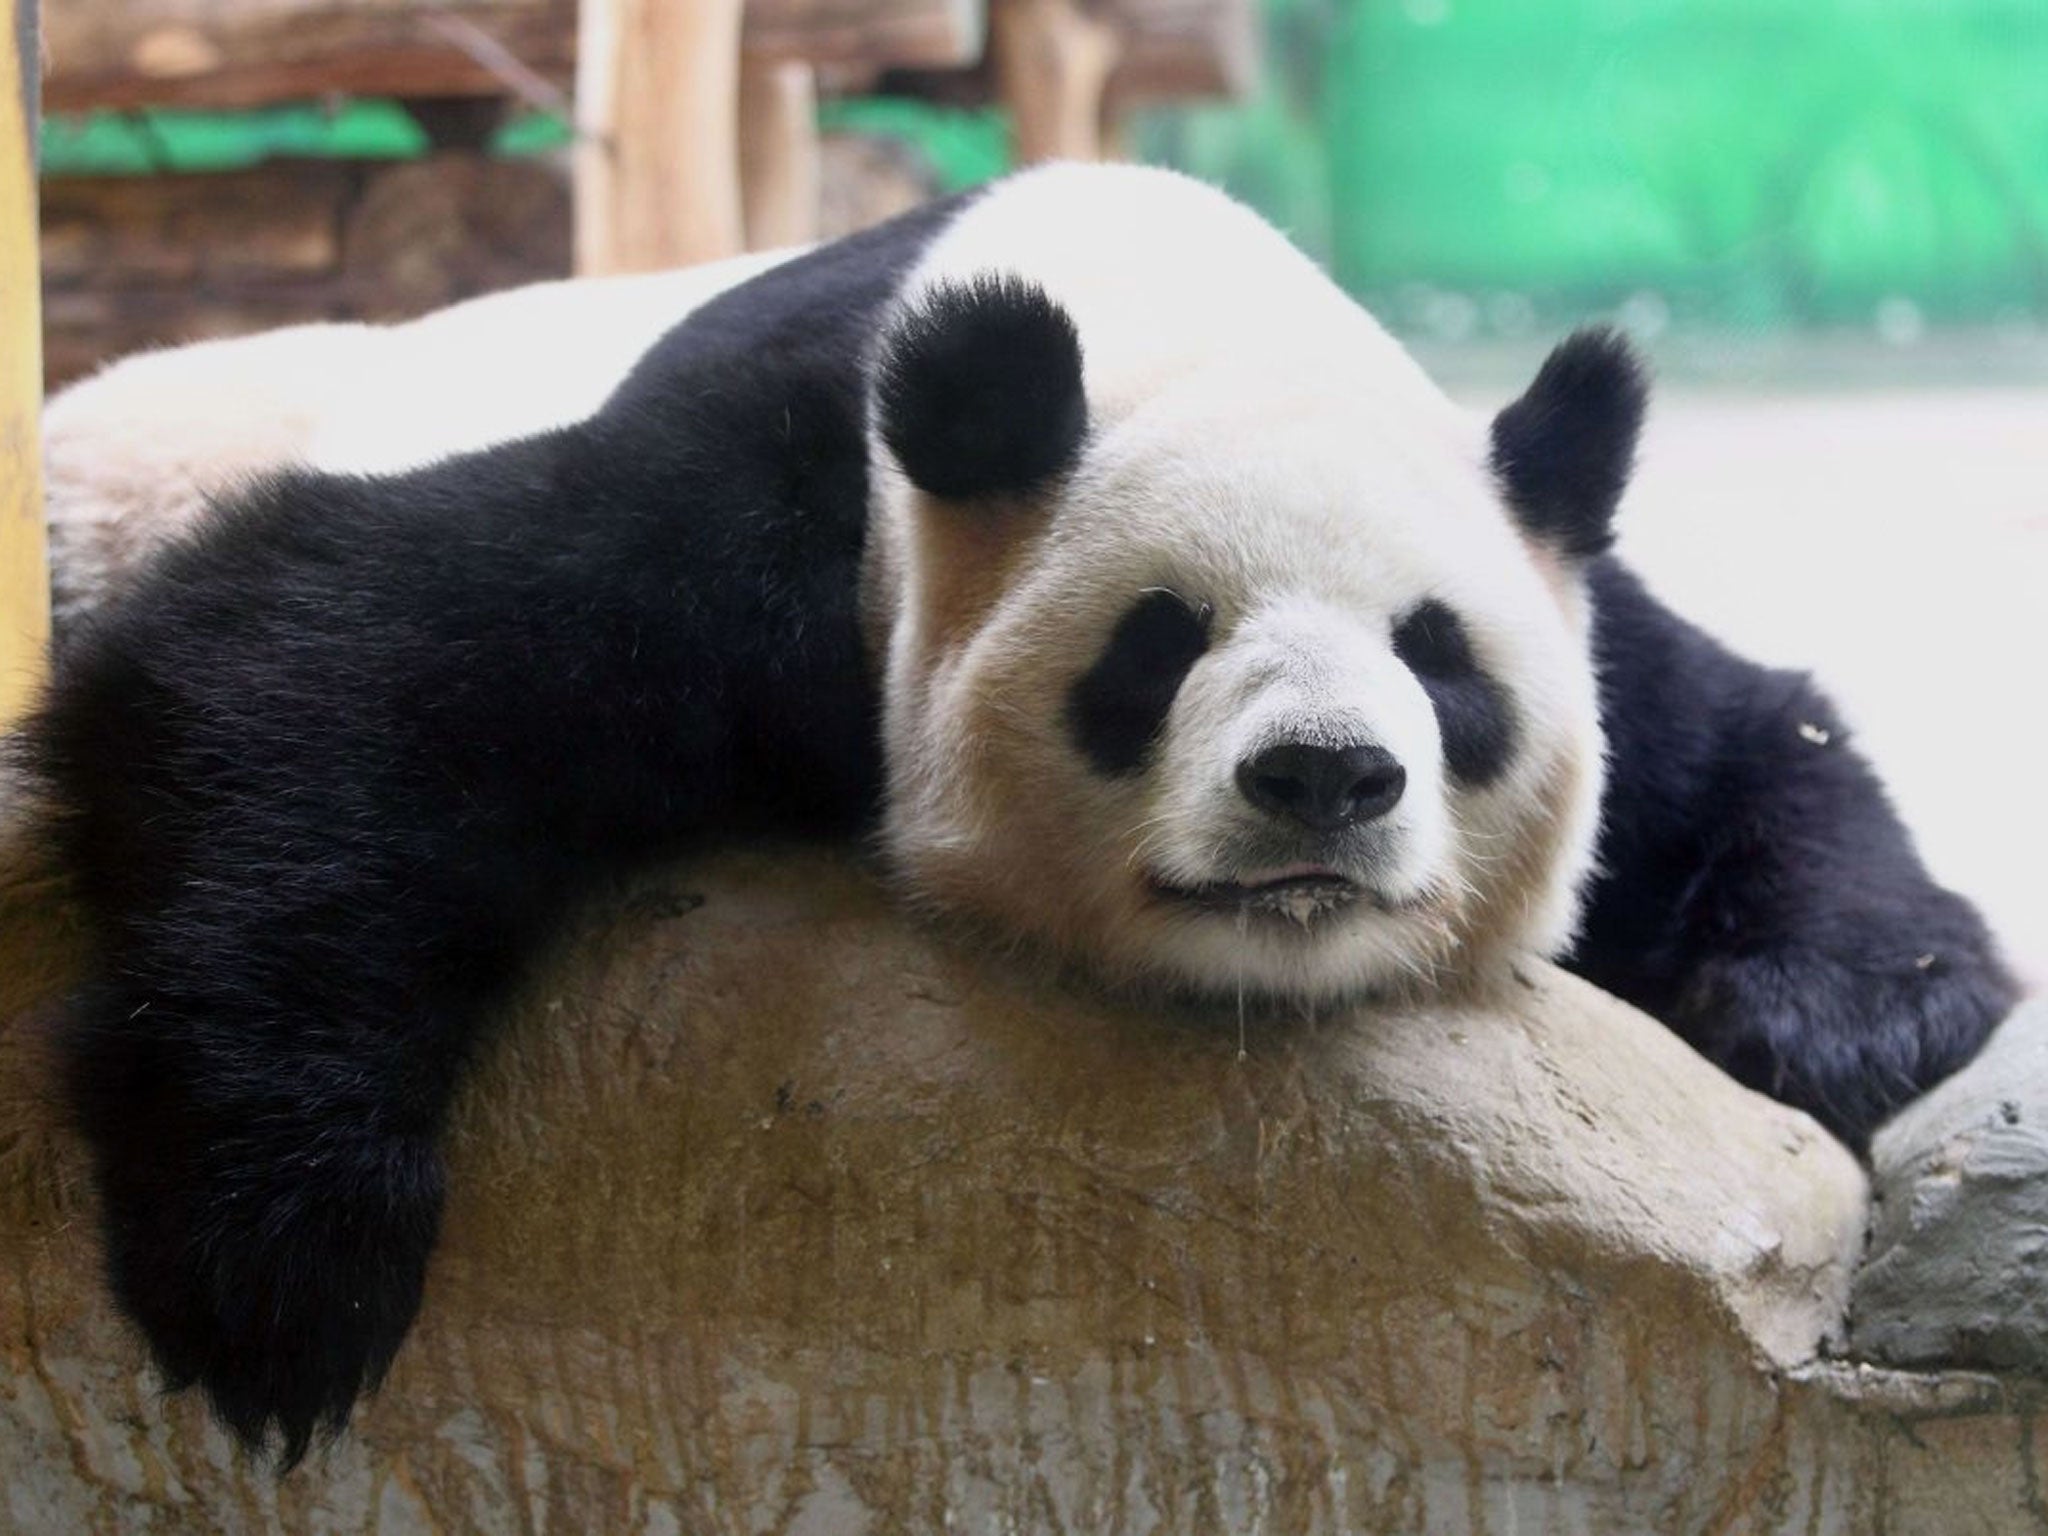 A giant panda sleeps in its enclosure